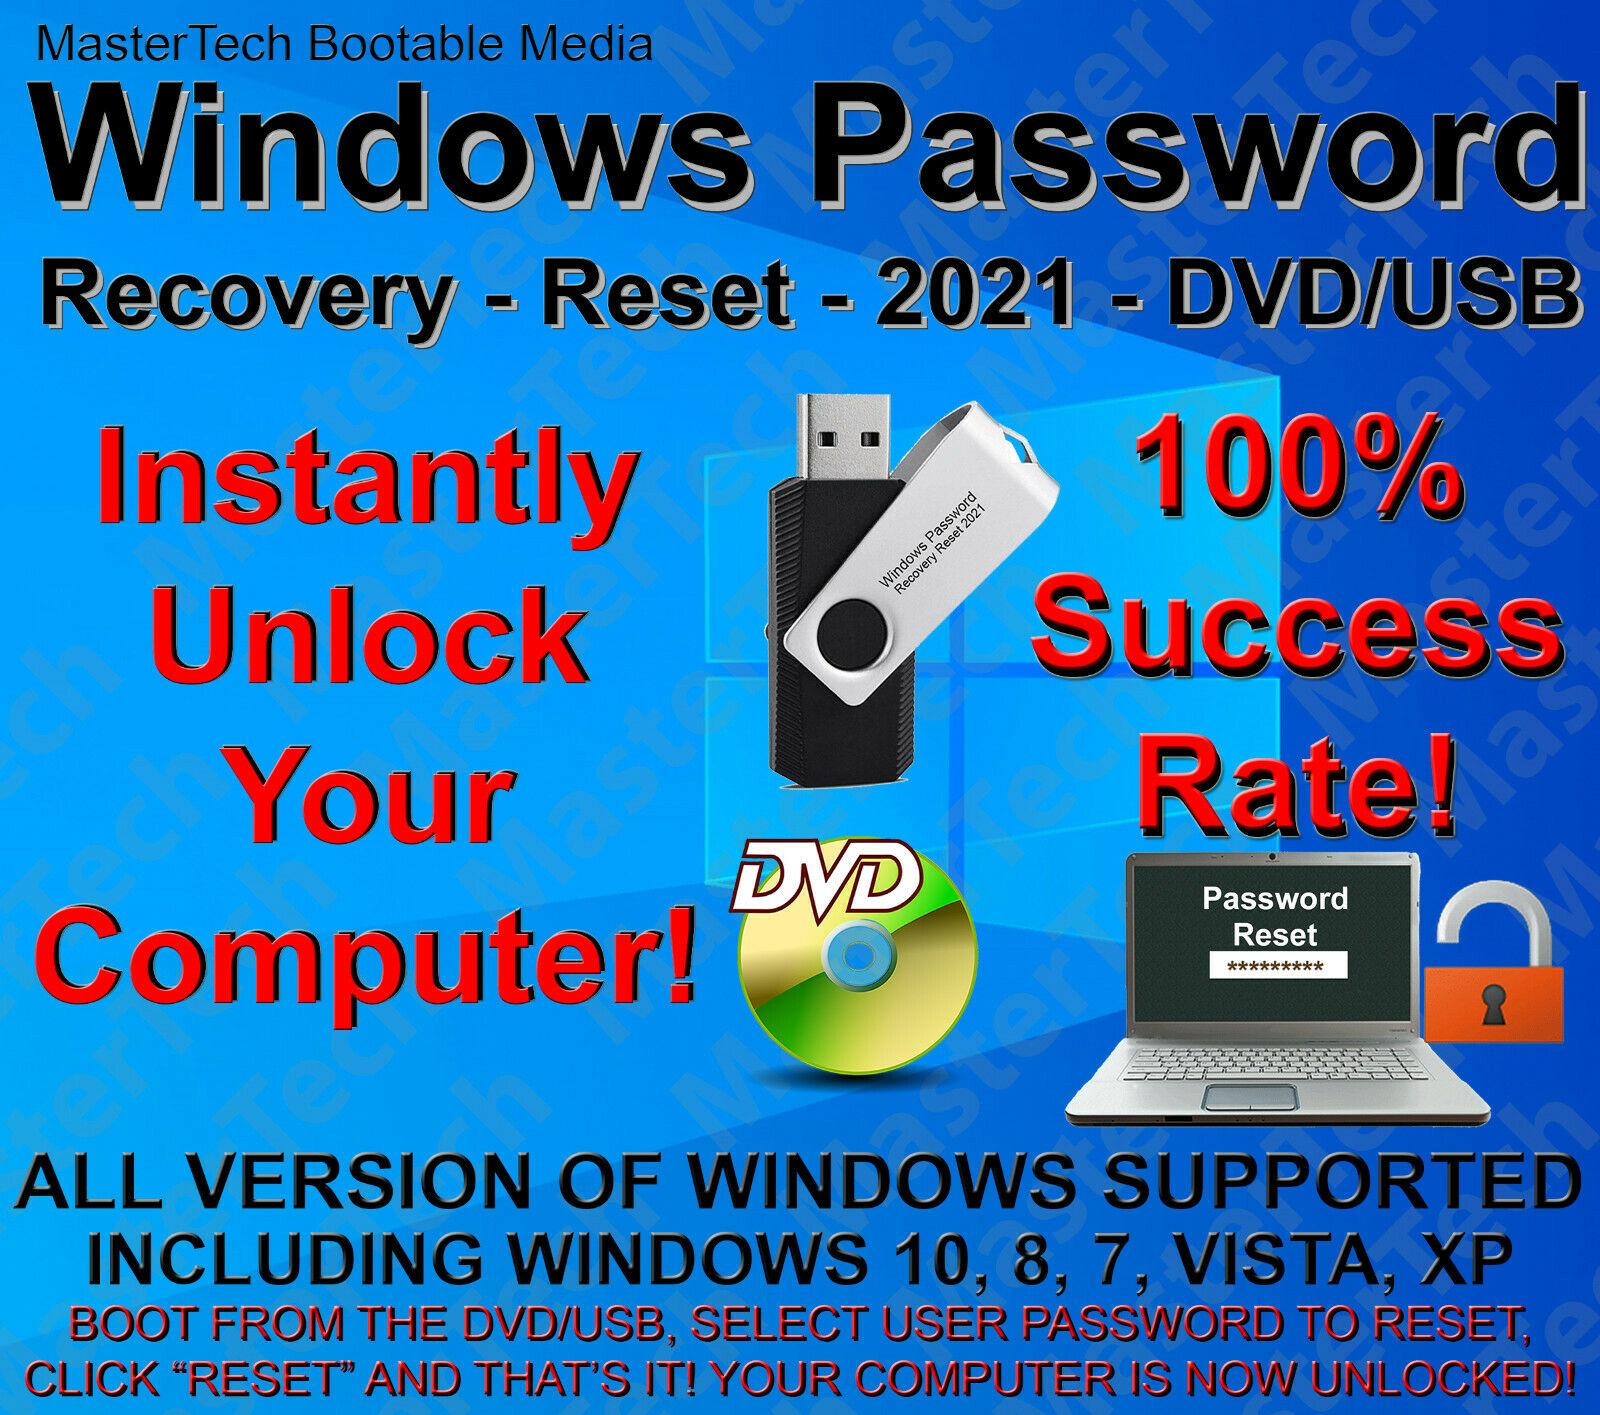 Windows Password Reset Recovery 2021 For Windows 10, 8, 7, Vista, Xp - Dvd/usb